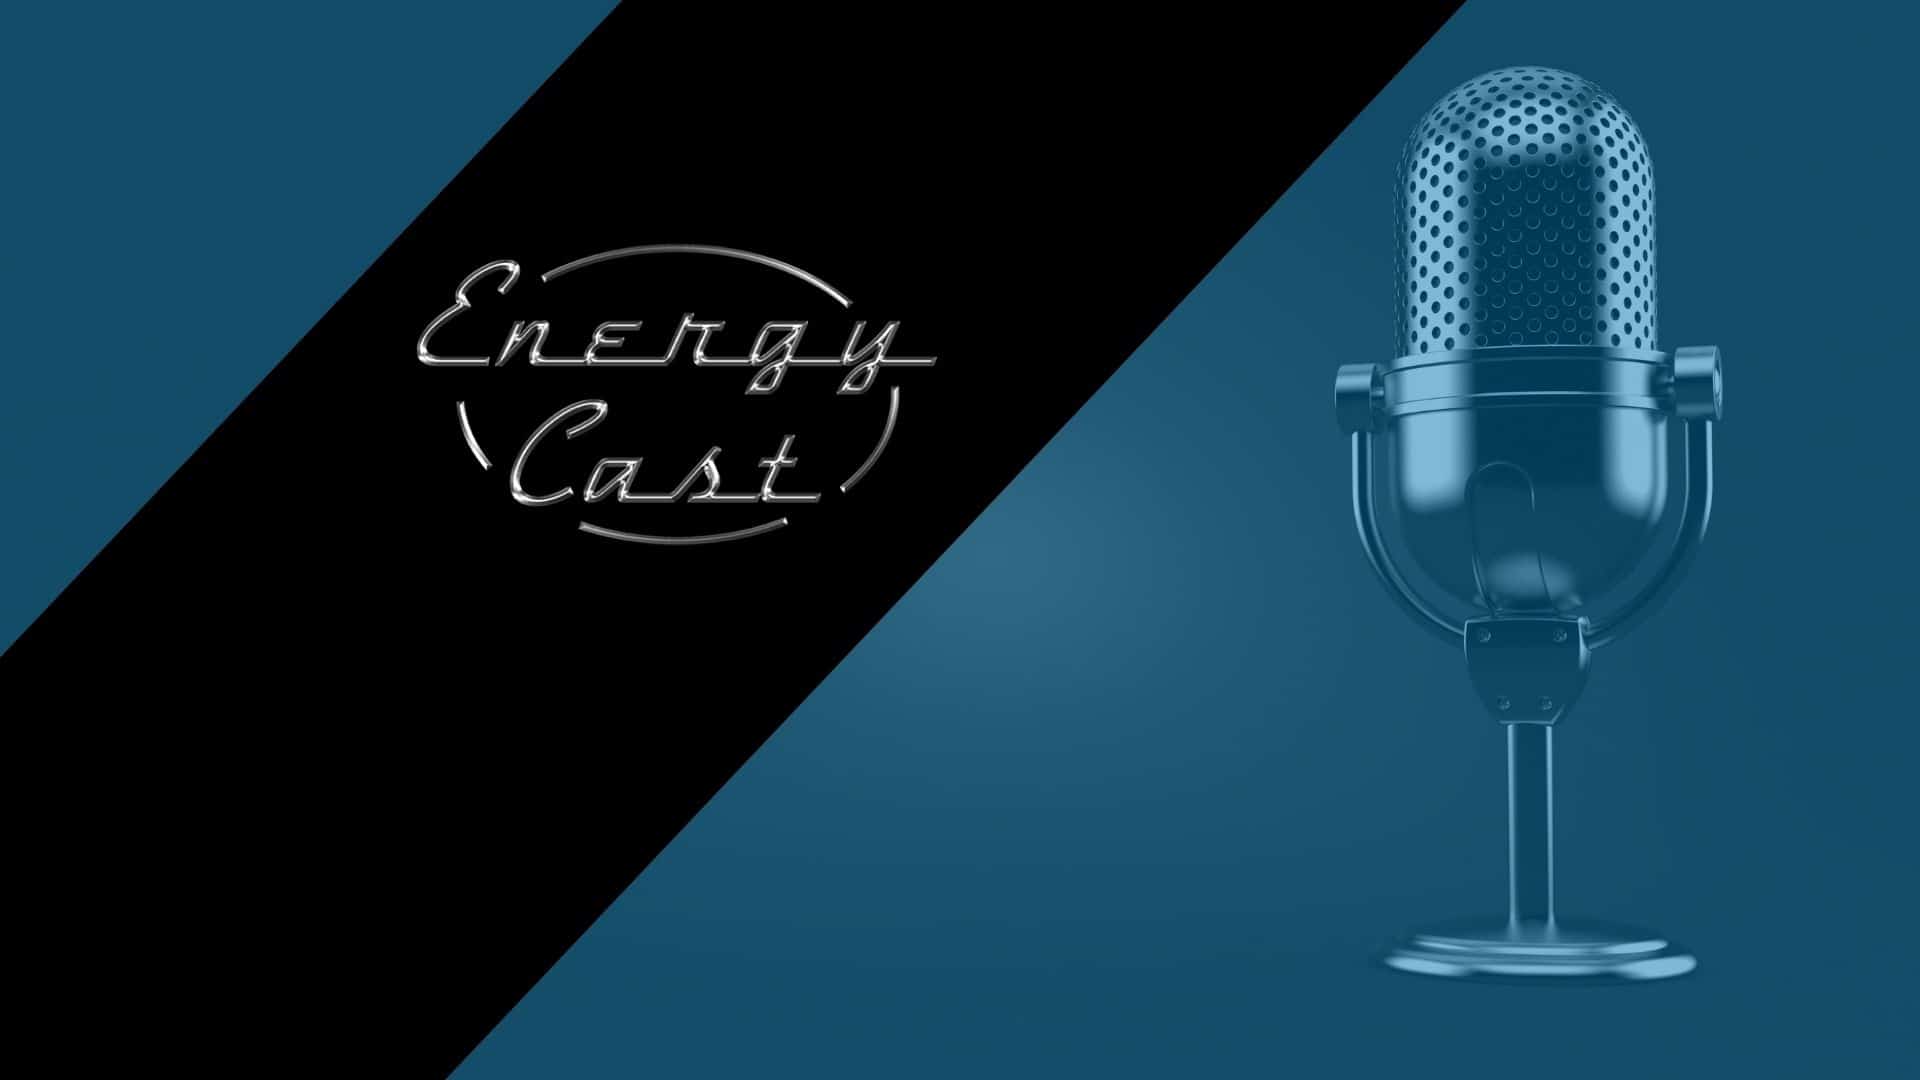 Energy Cast podcast